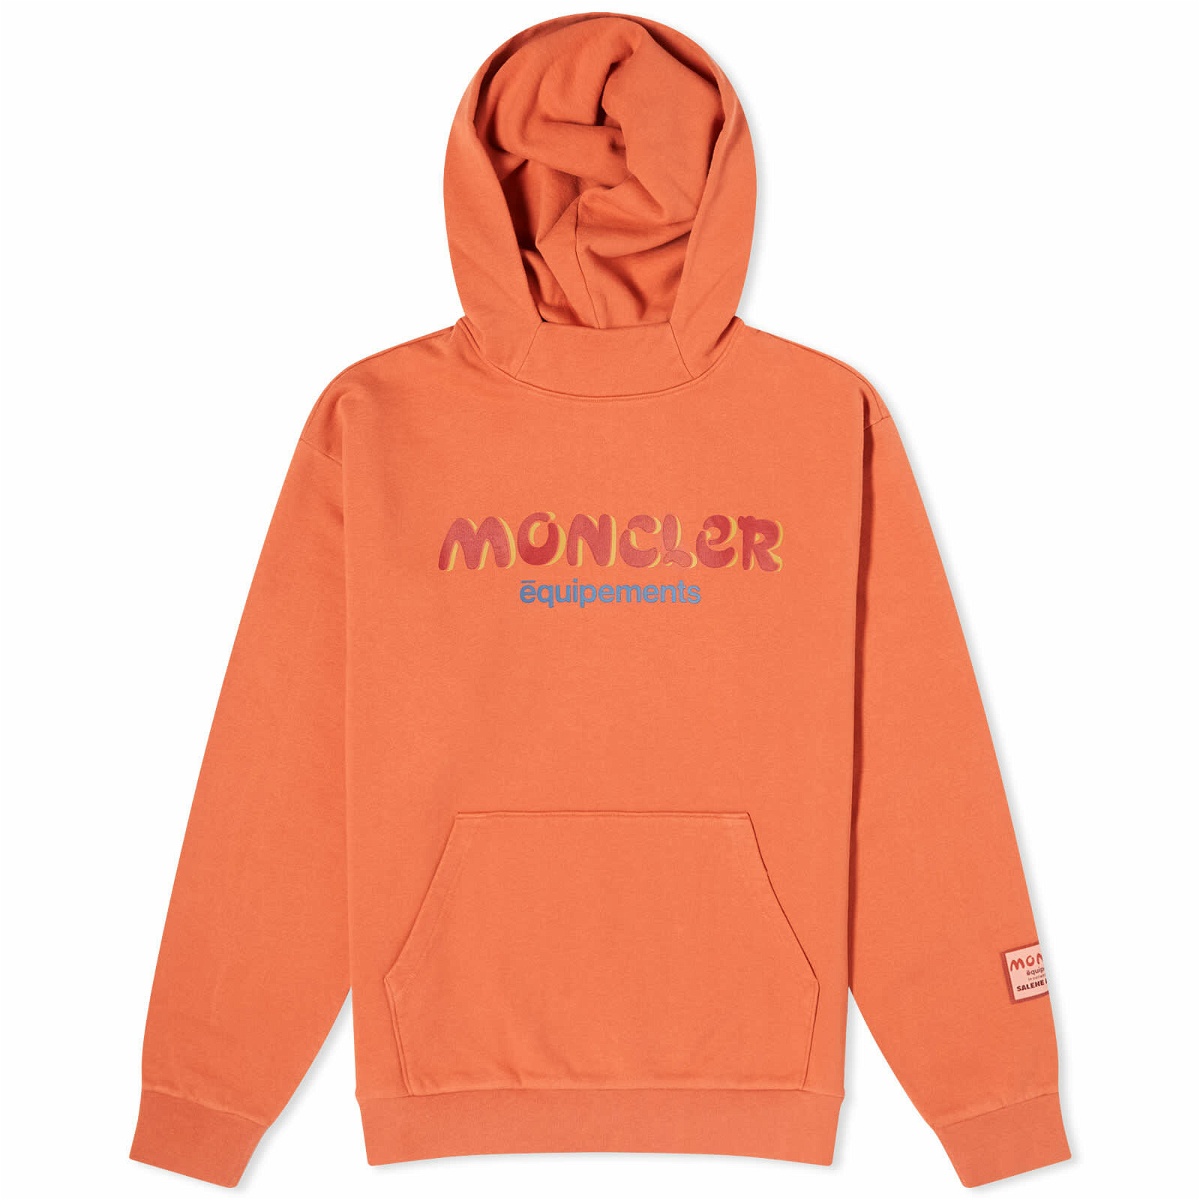 Moncler Genius x Salehe Bembury Popover Hoody in Orange Moncler